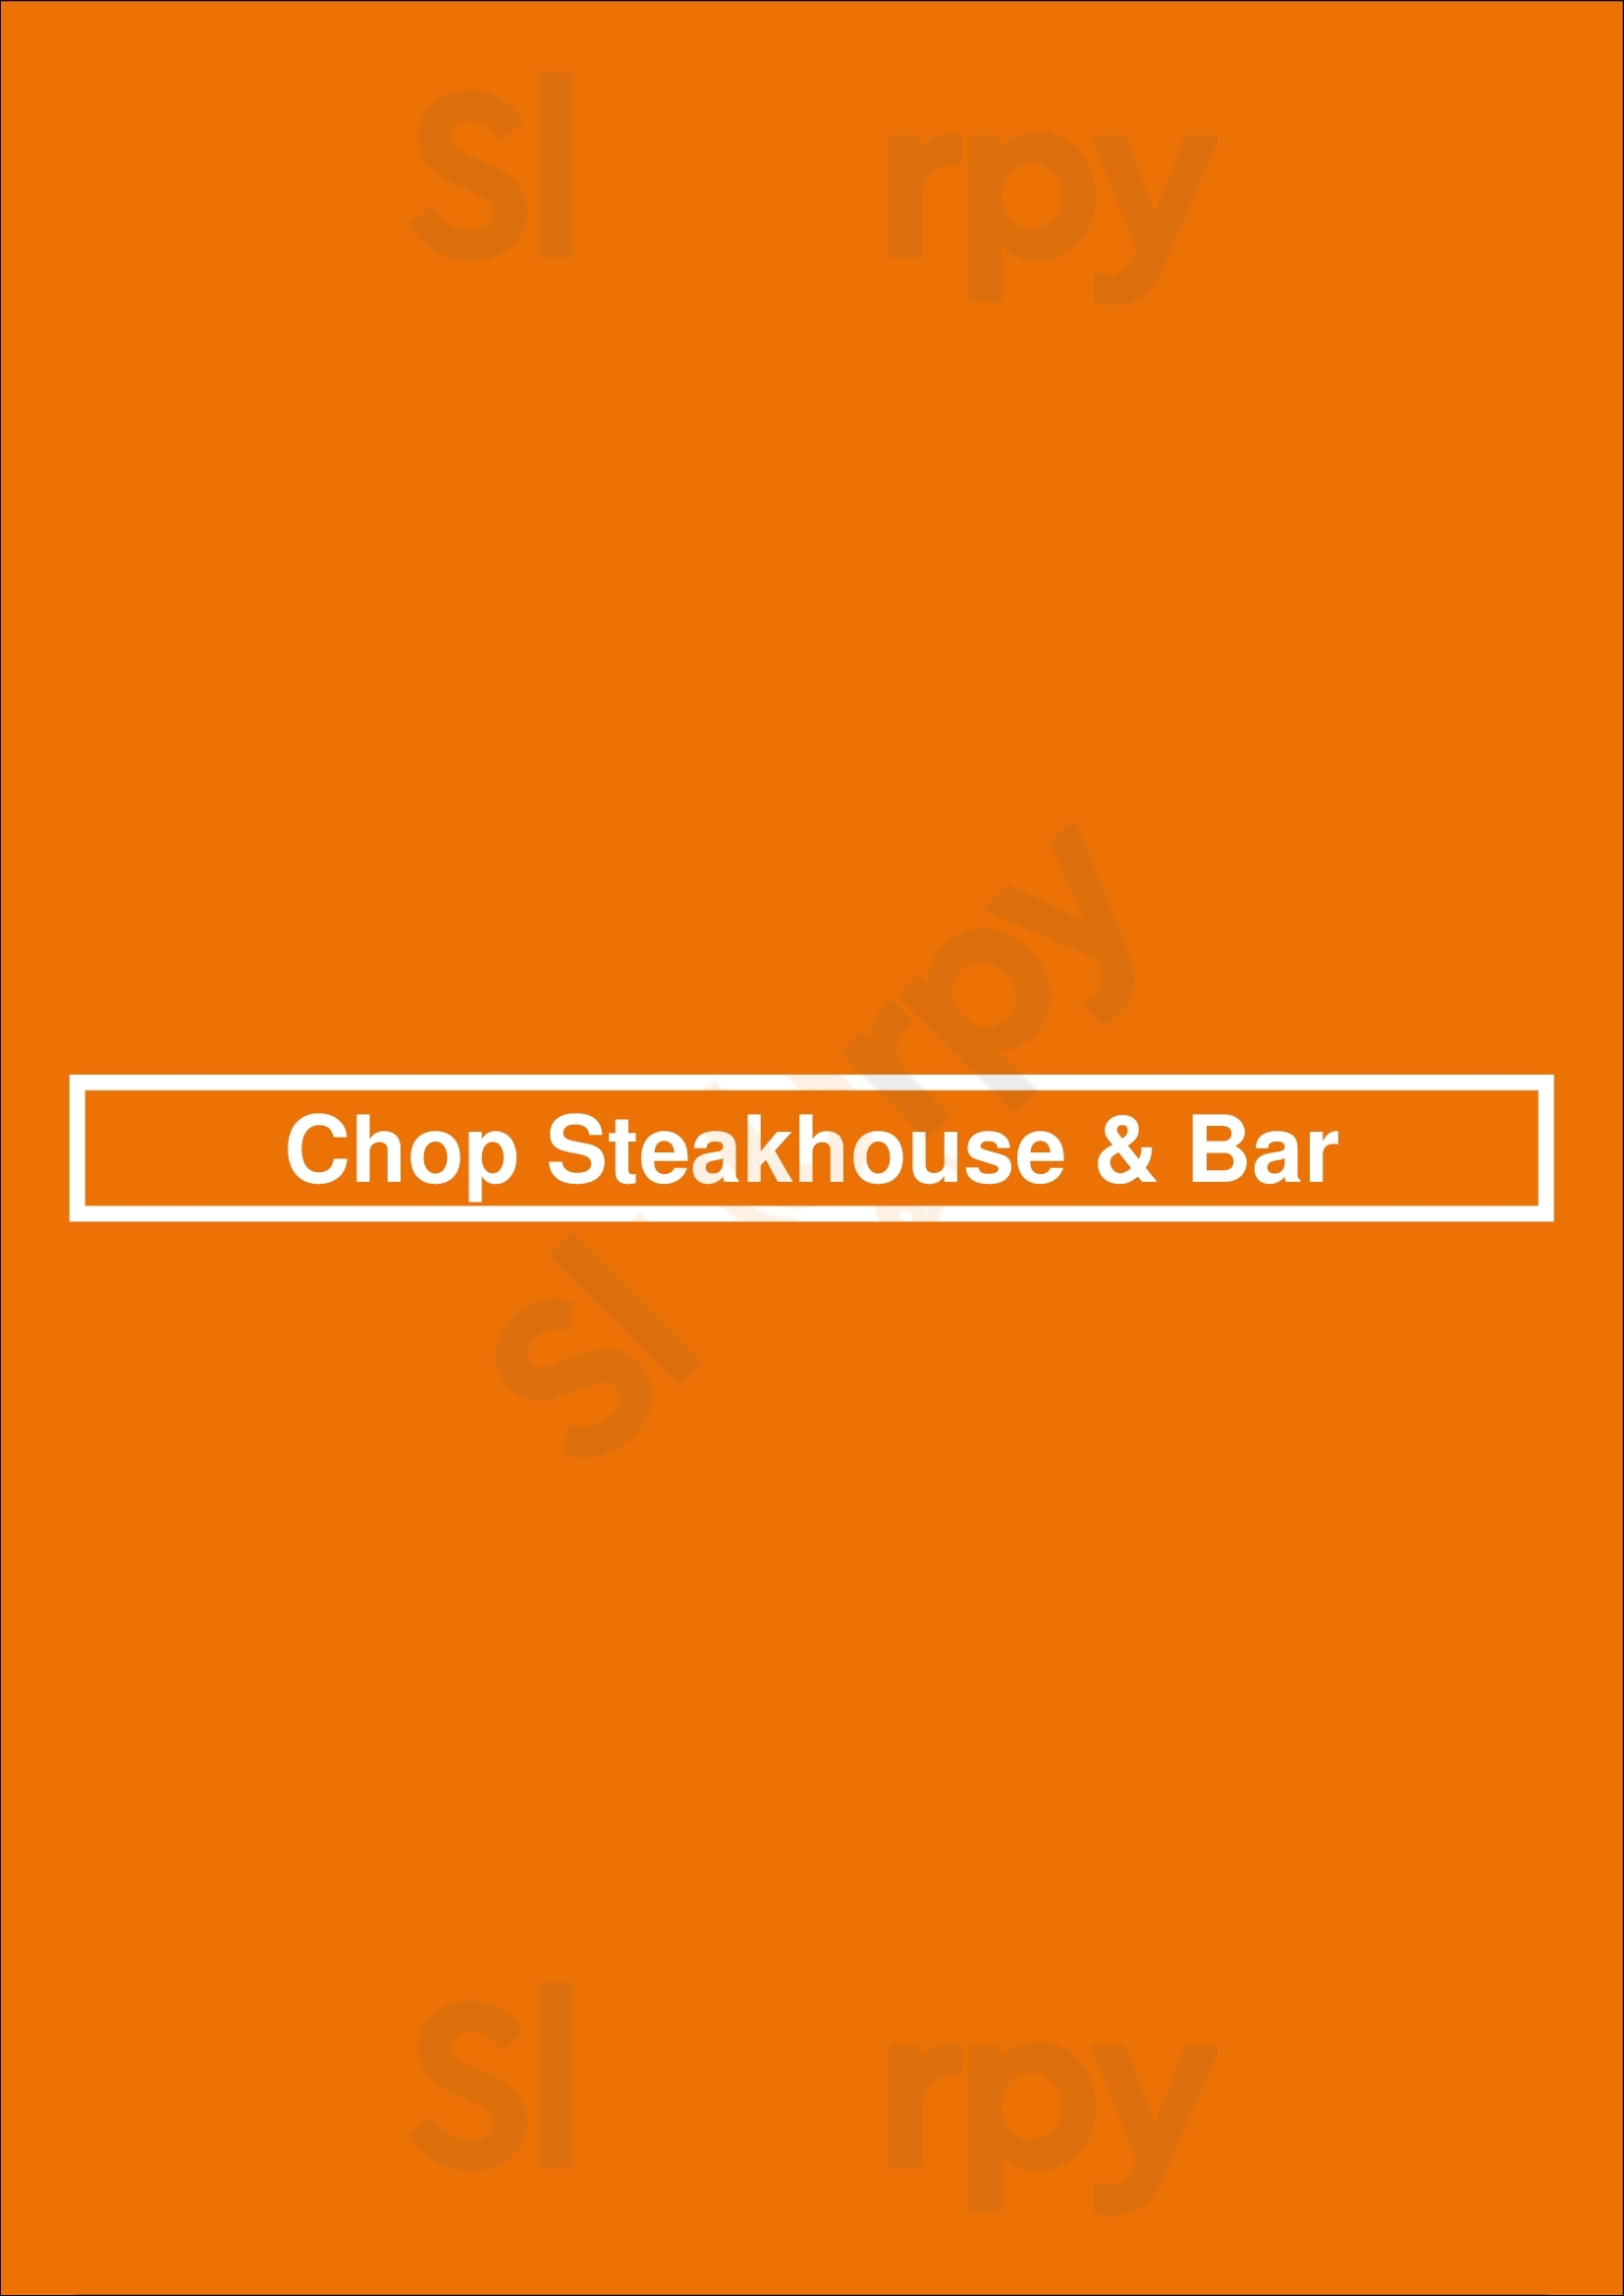 Chop Steakhouse & Bar Toronto Menu - 1